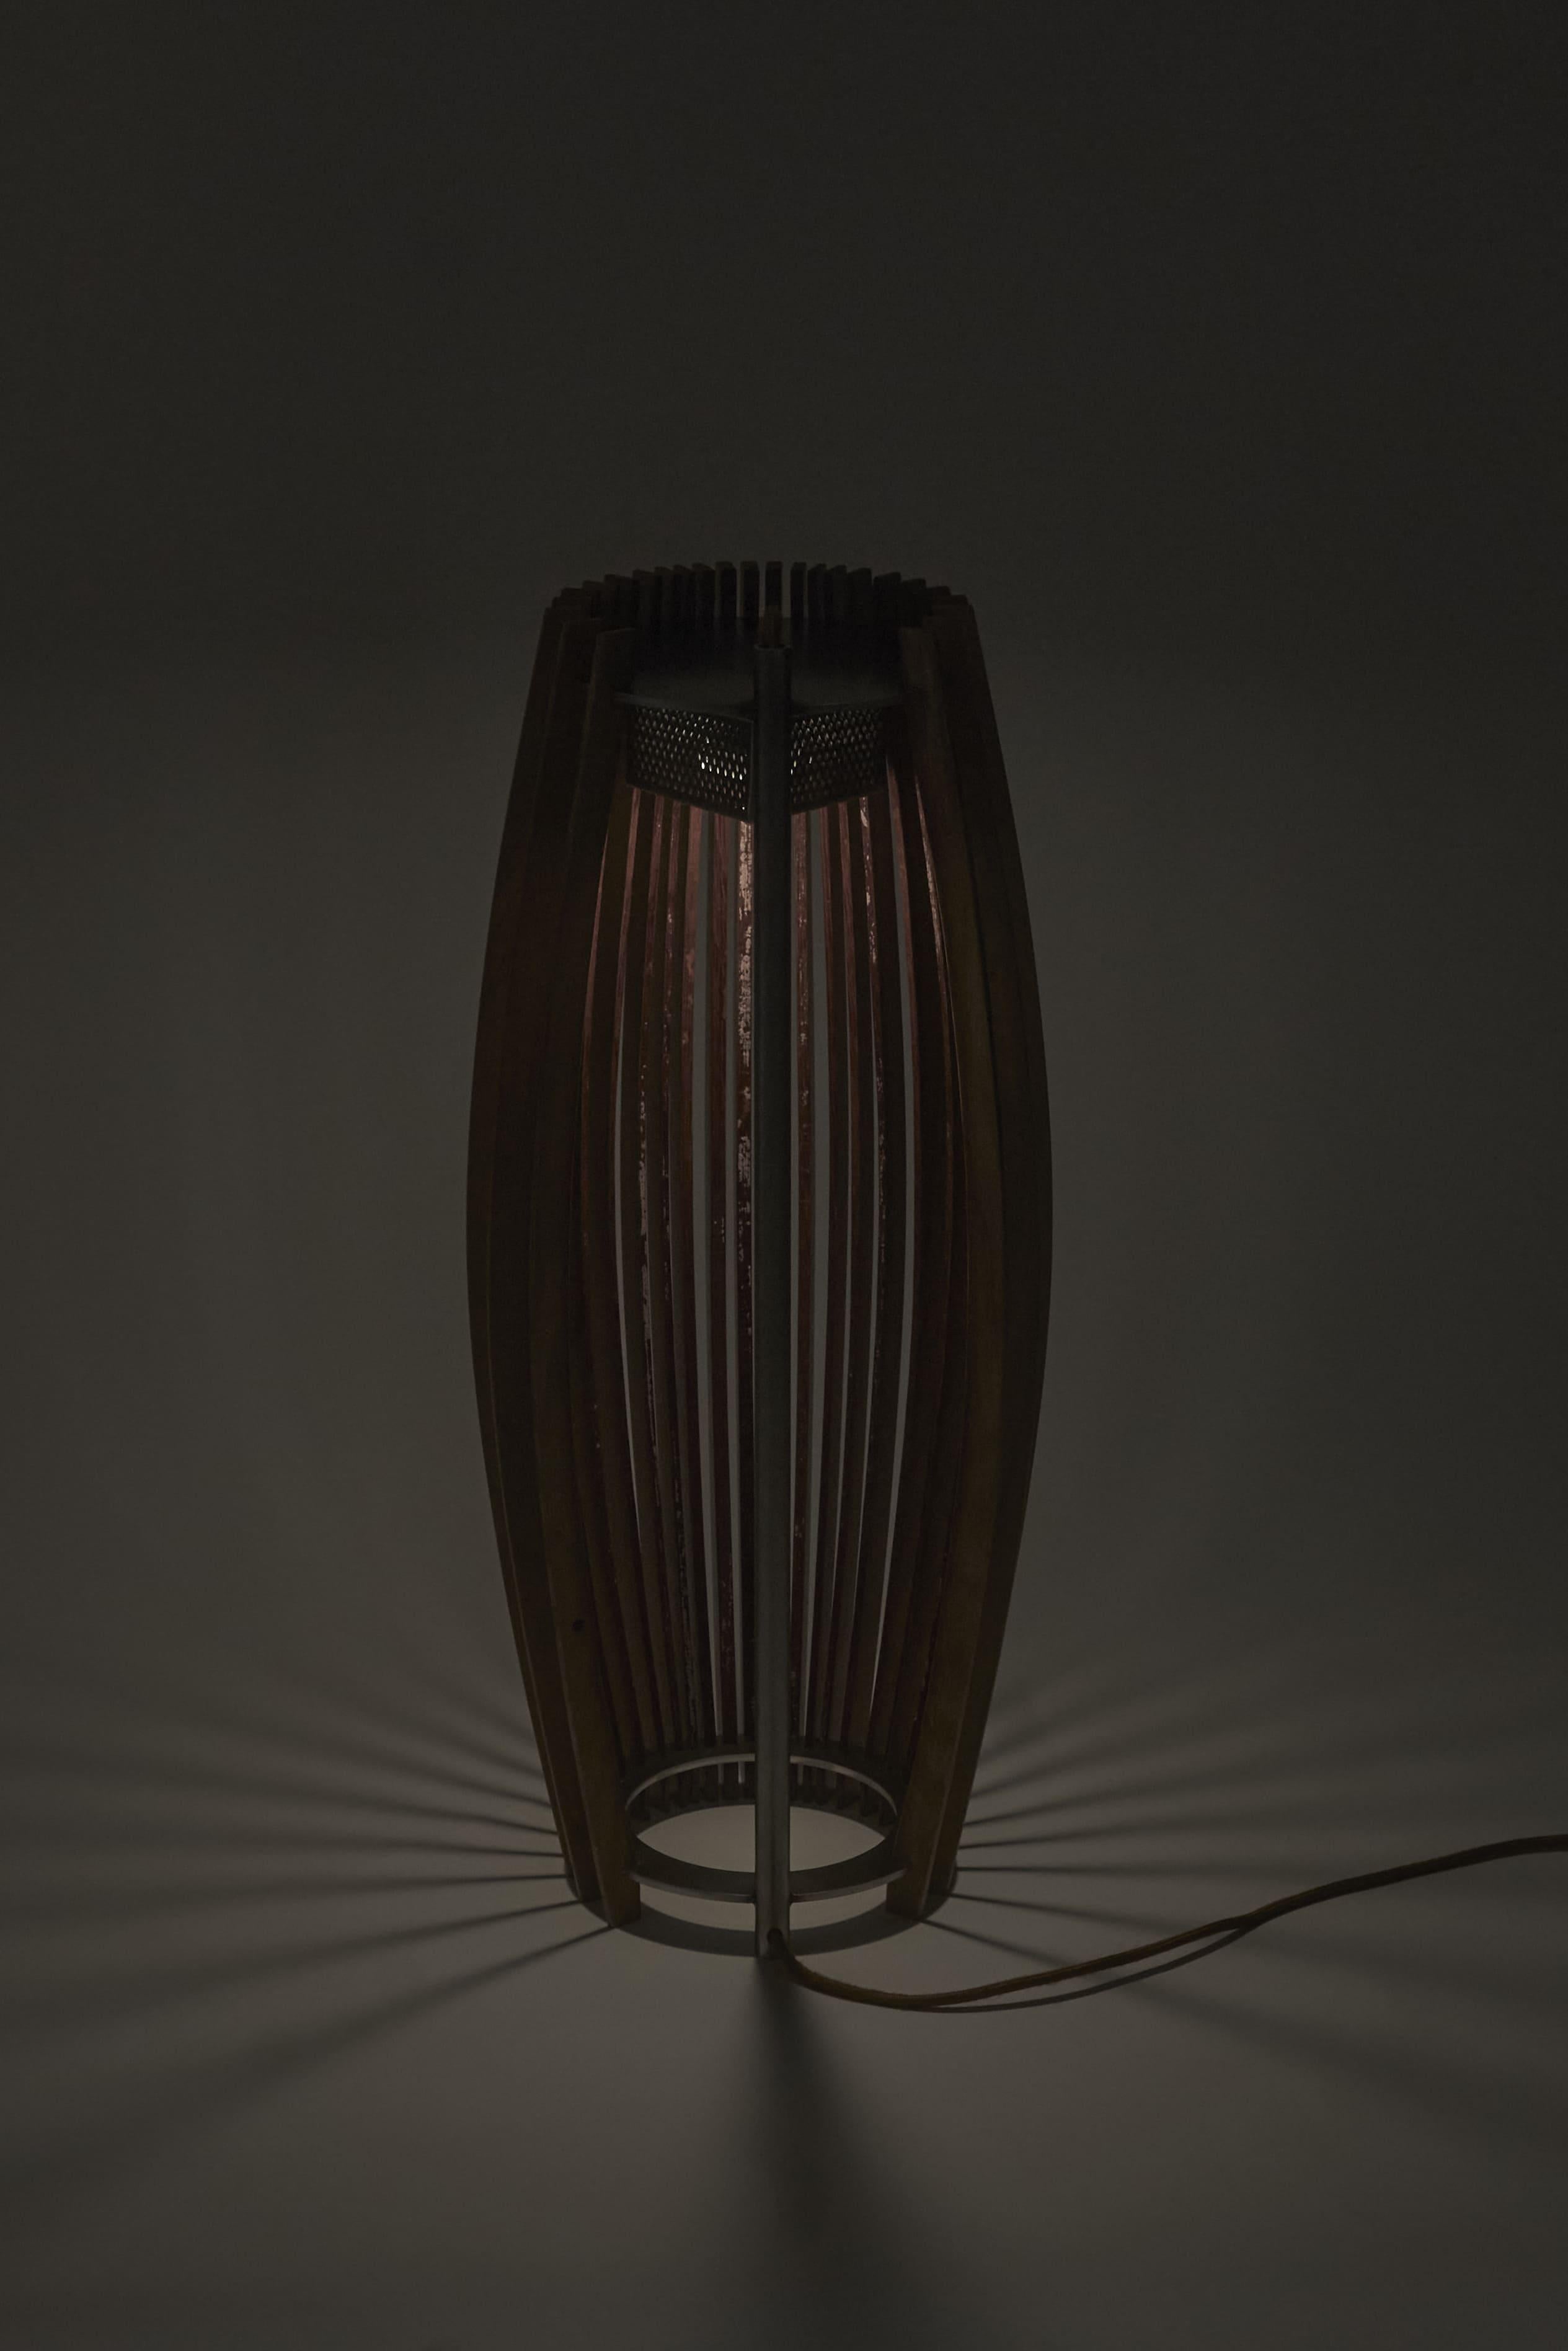 Stainless Steel Ibla floor lamp by Winetage handmade in Italy For Sale